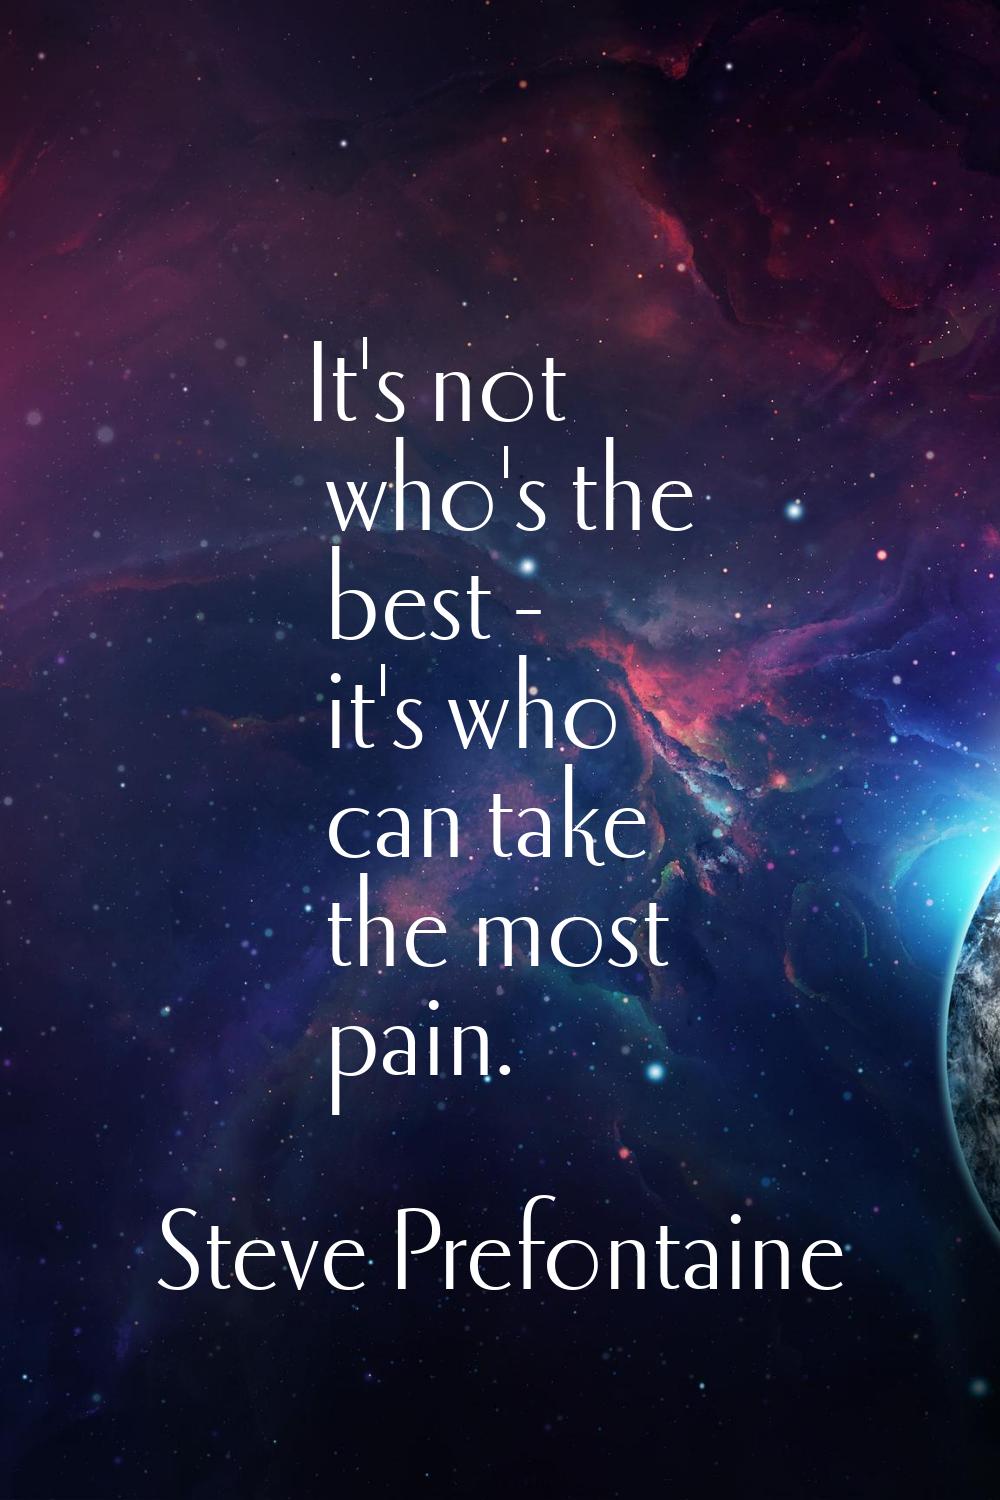 It's not who's the best - it's who can take the most pain.